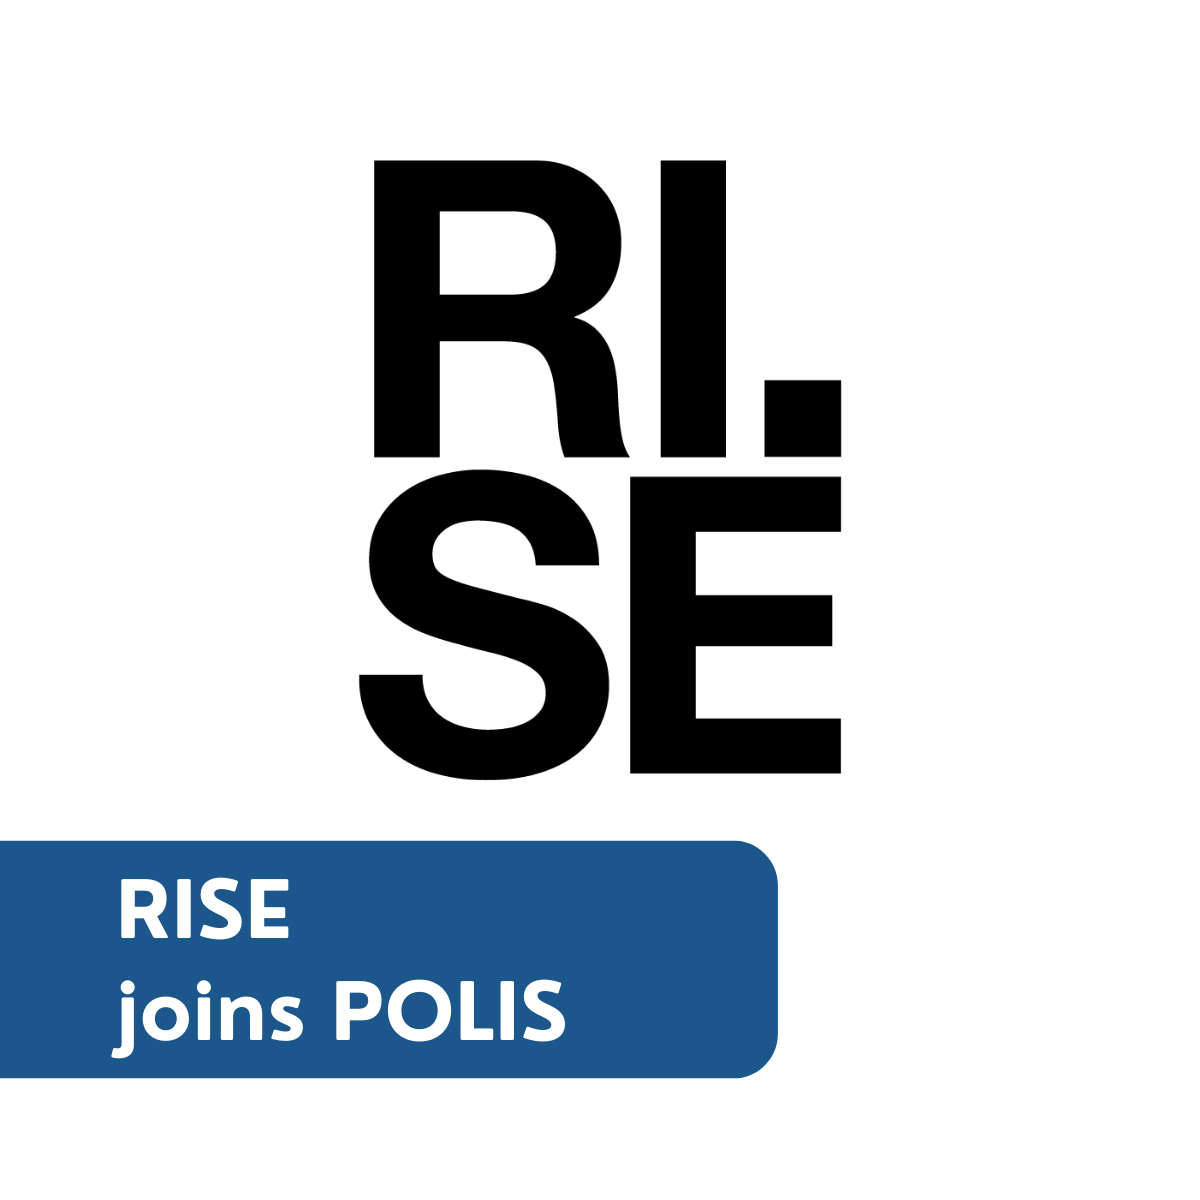 RISE joins POLIS!